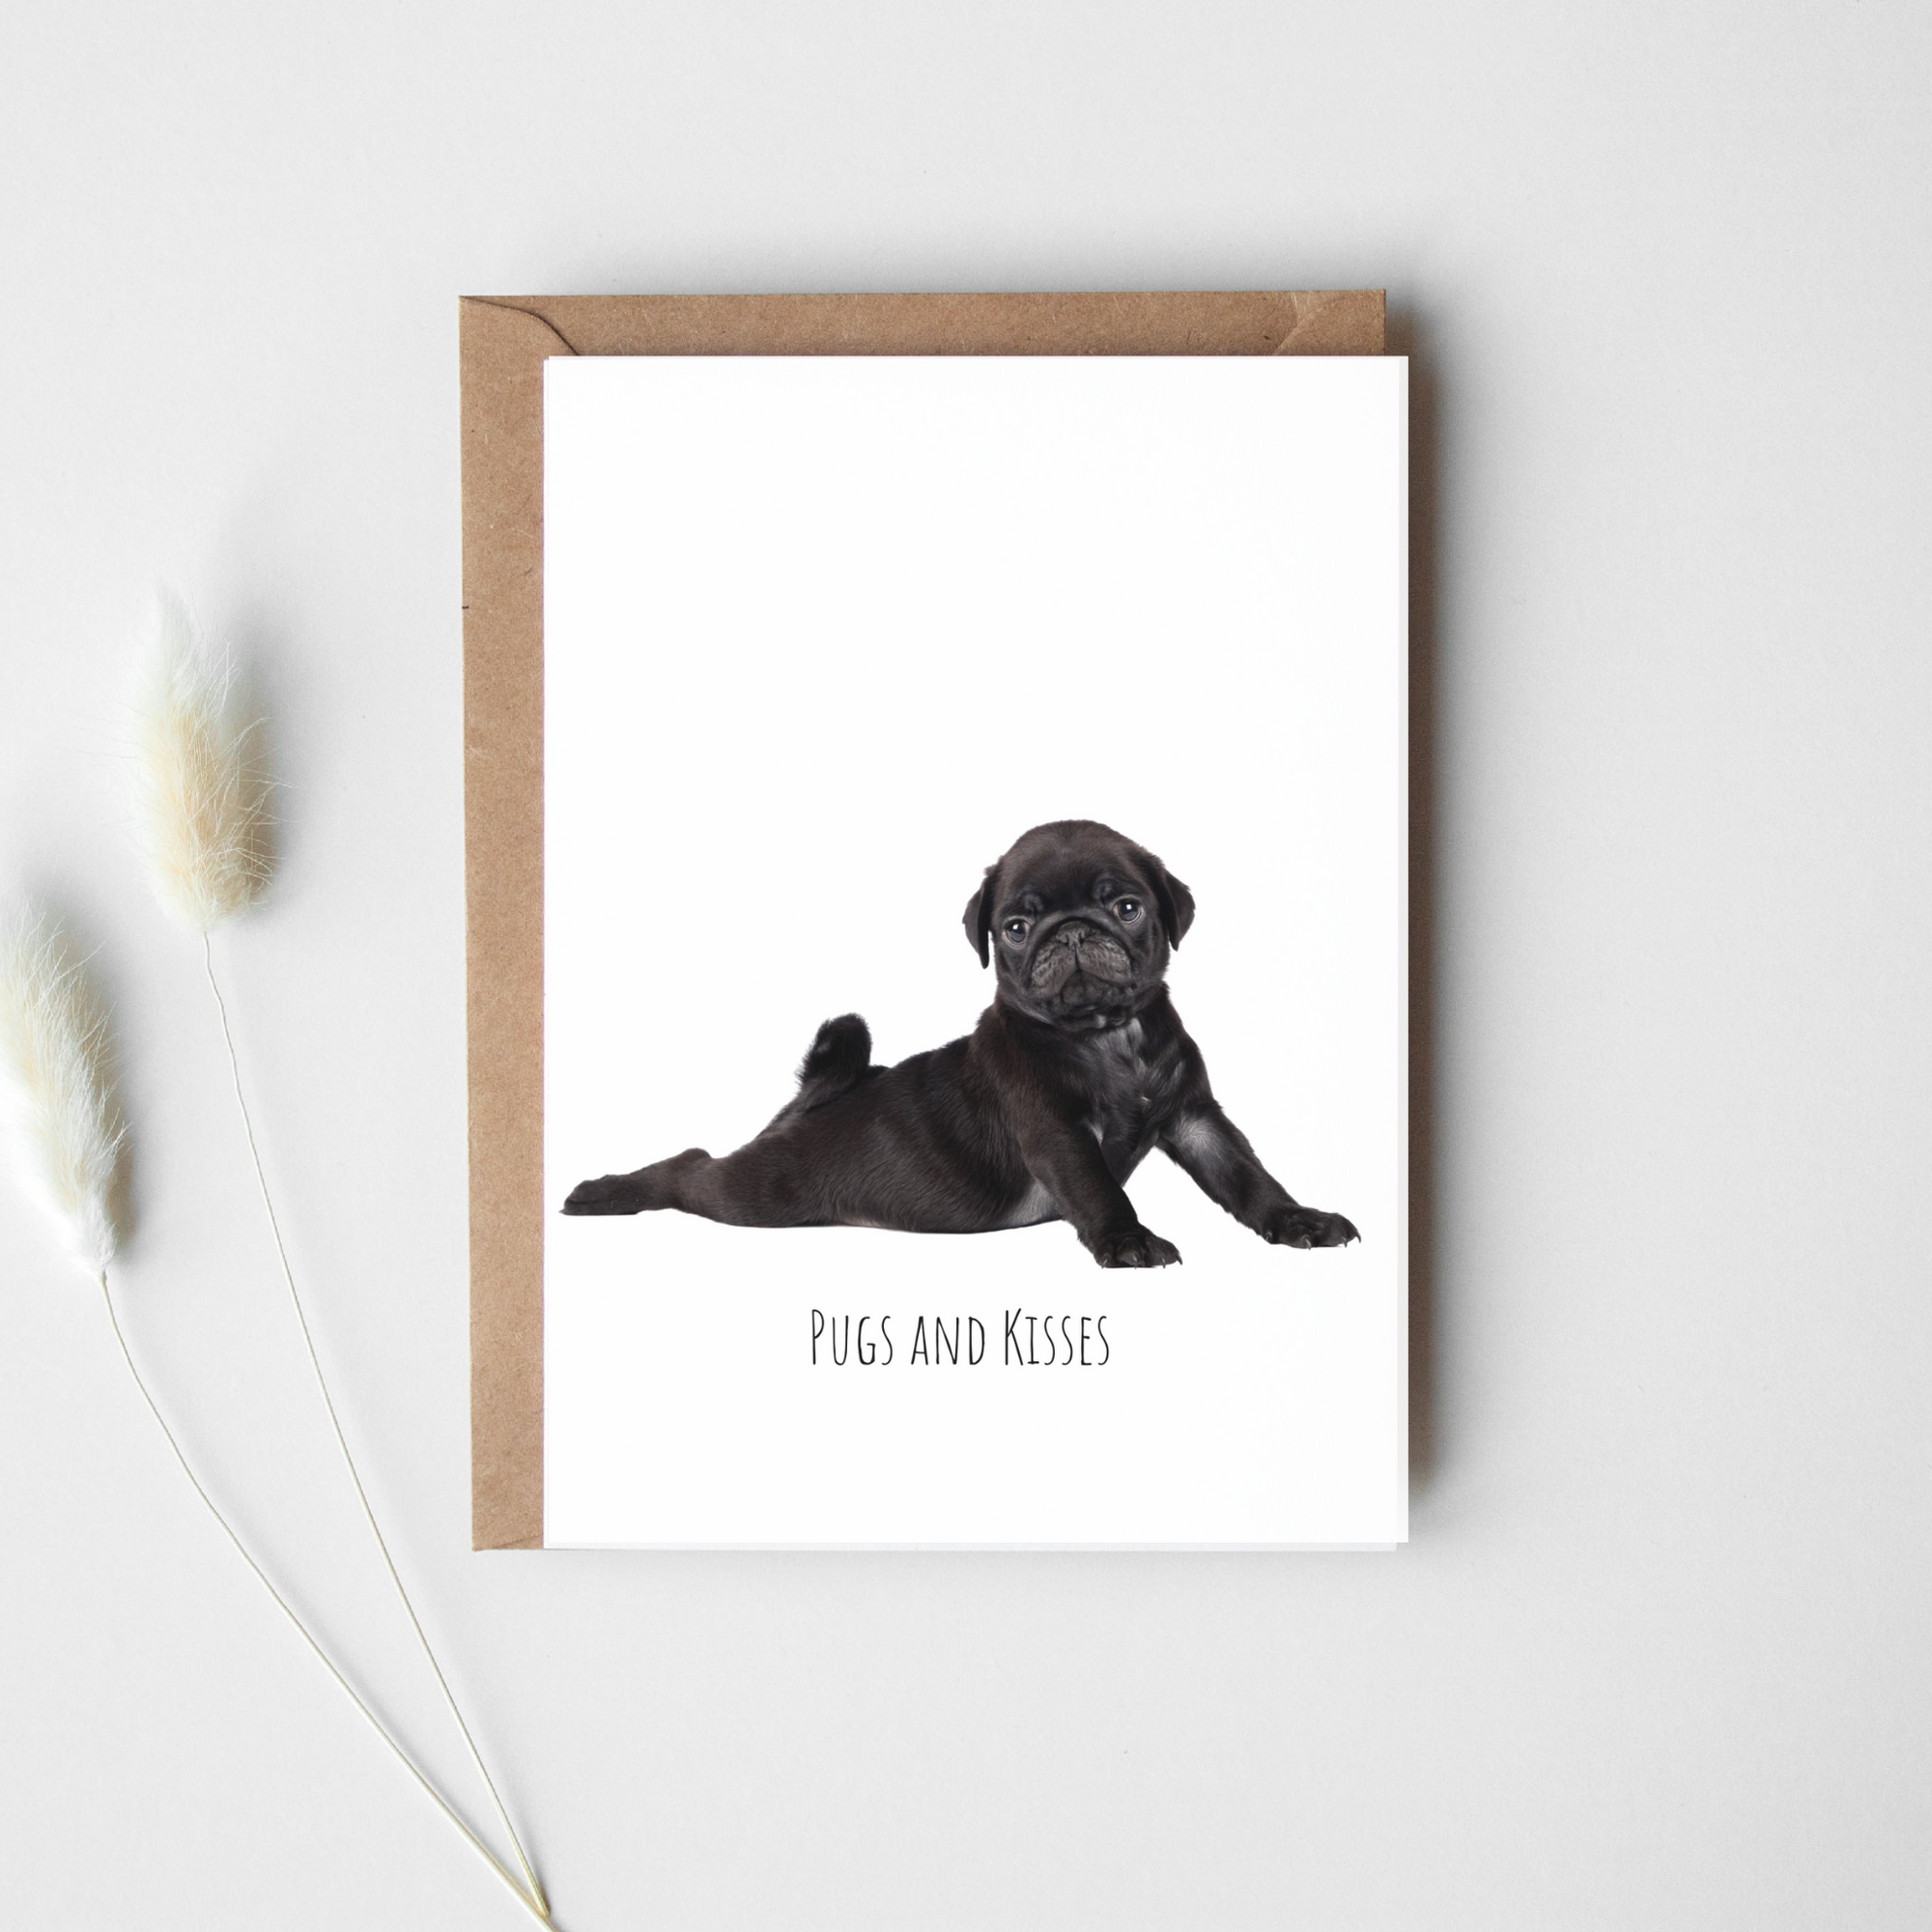 Pugs and Kisses Dog Greeting Card